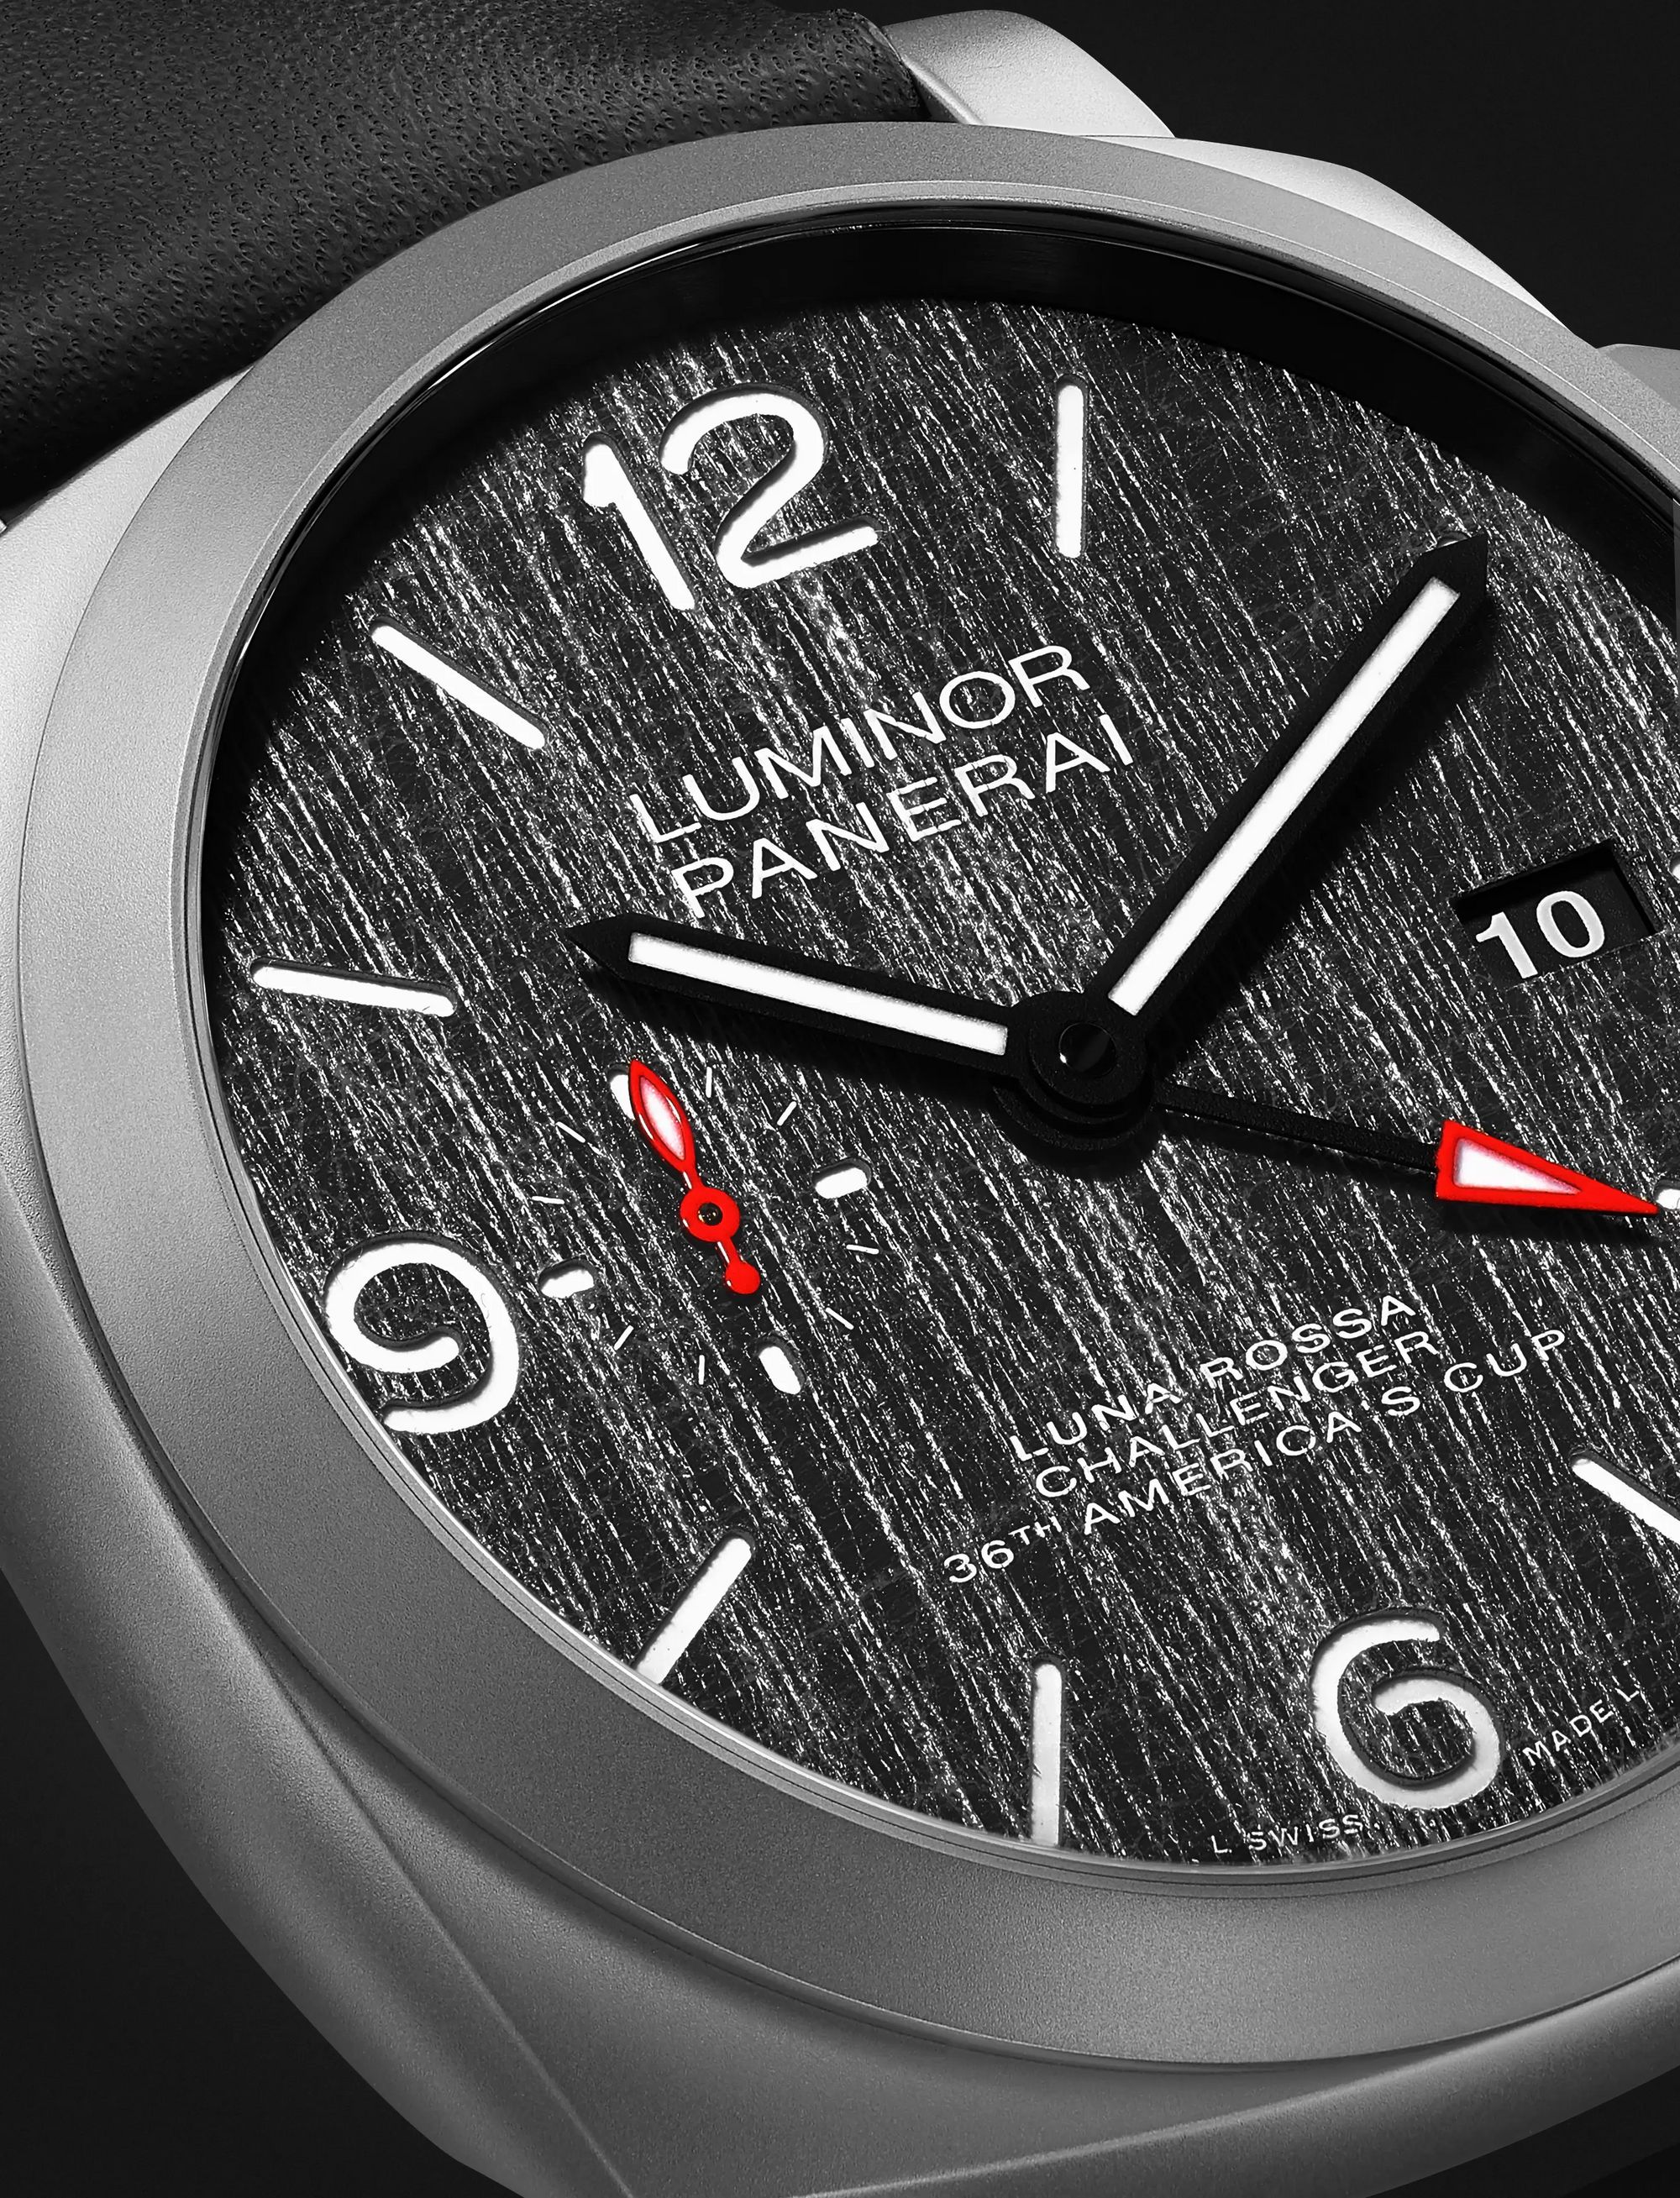 PANERAI Luminor Luna Rossa GMT Automatic 44mm Titanium and Leather Watch, Ref. No. PAM01036